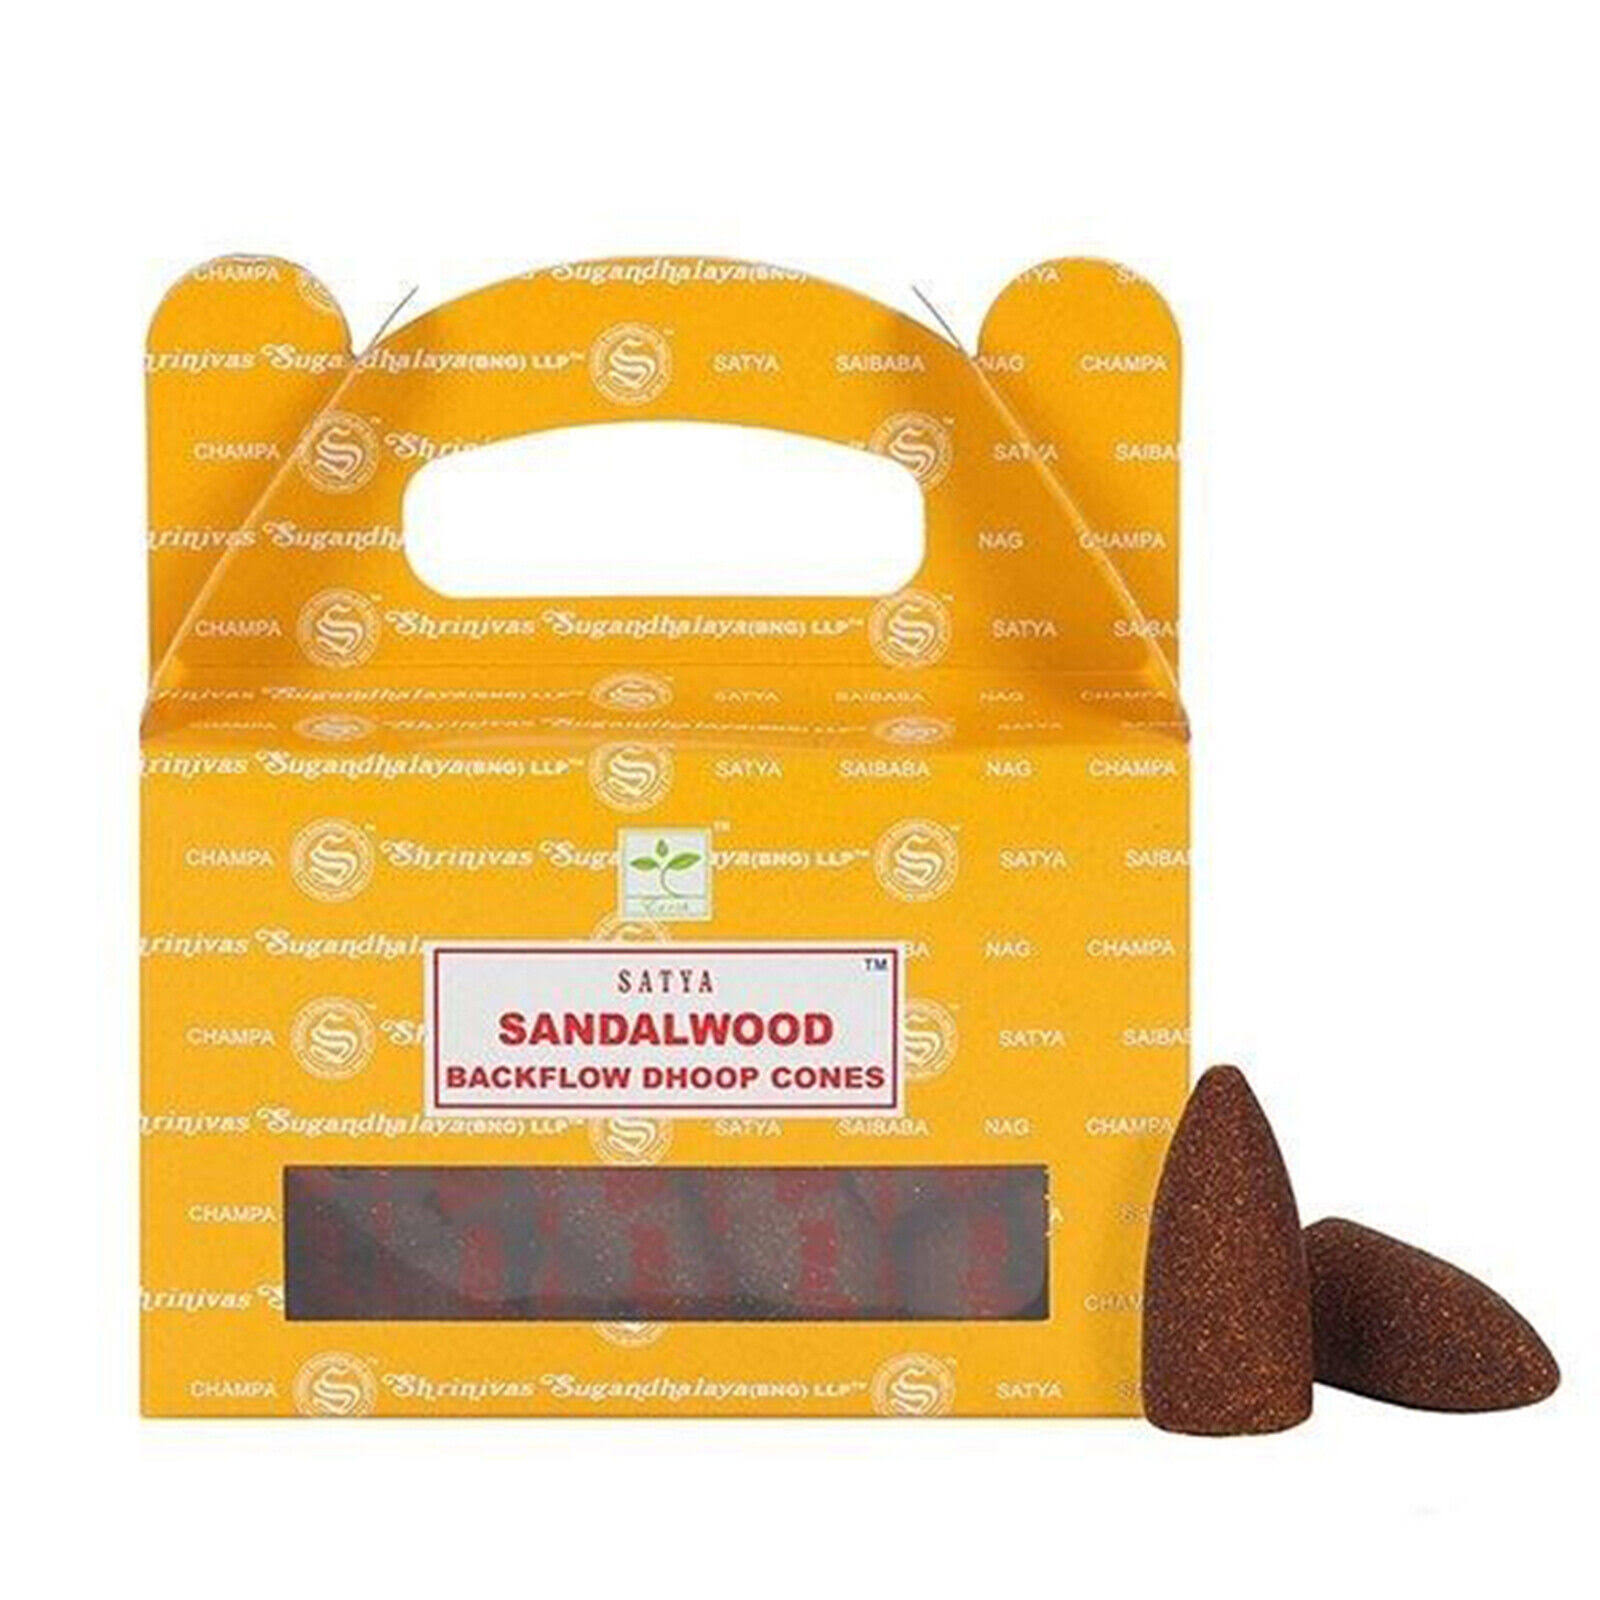 Satya Sandalwood Backflow Dhoop Cones - Box of 6